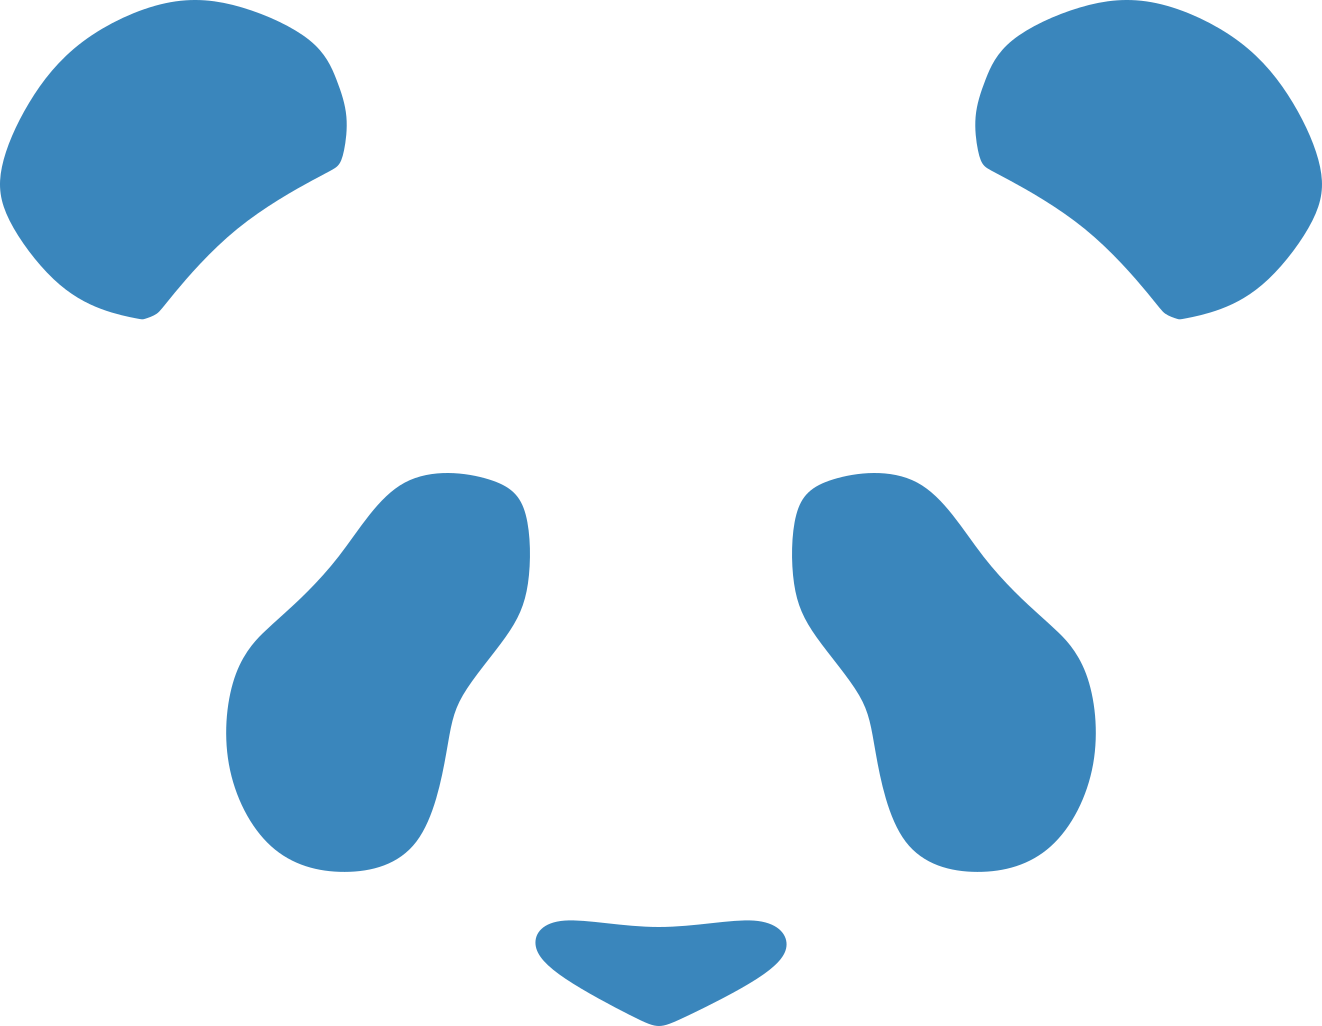 Blu panda logo